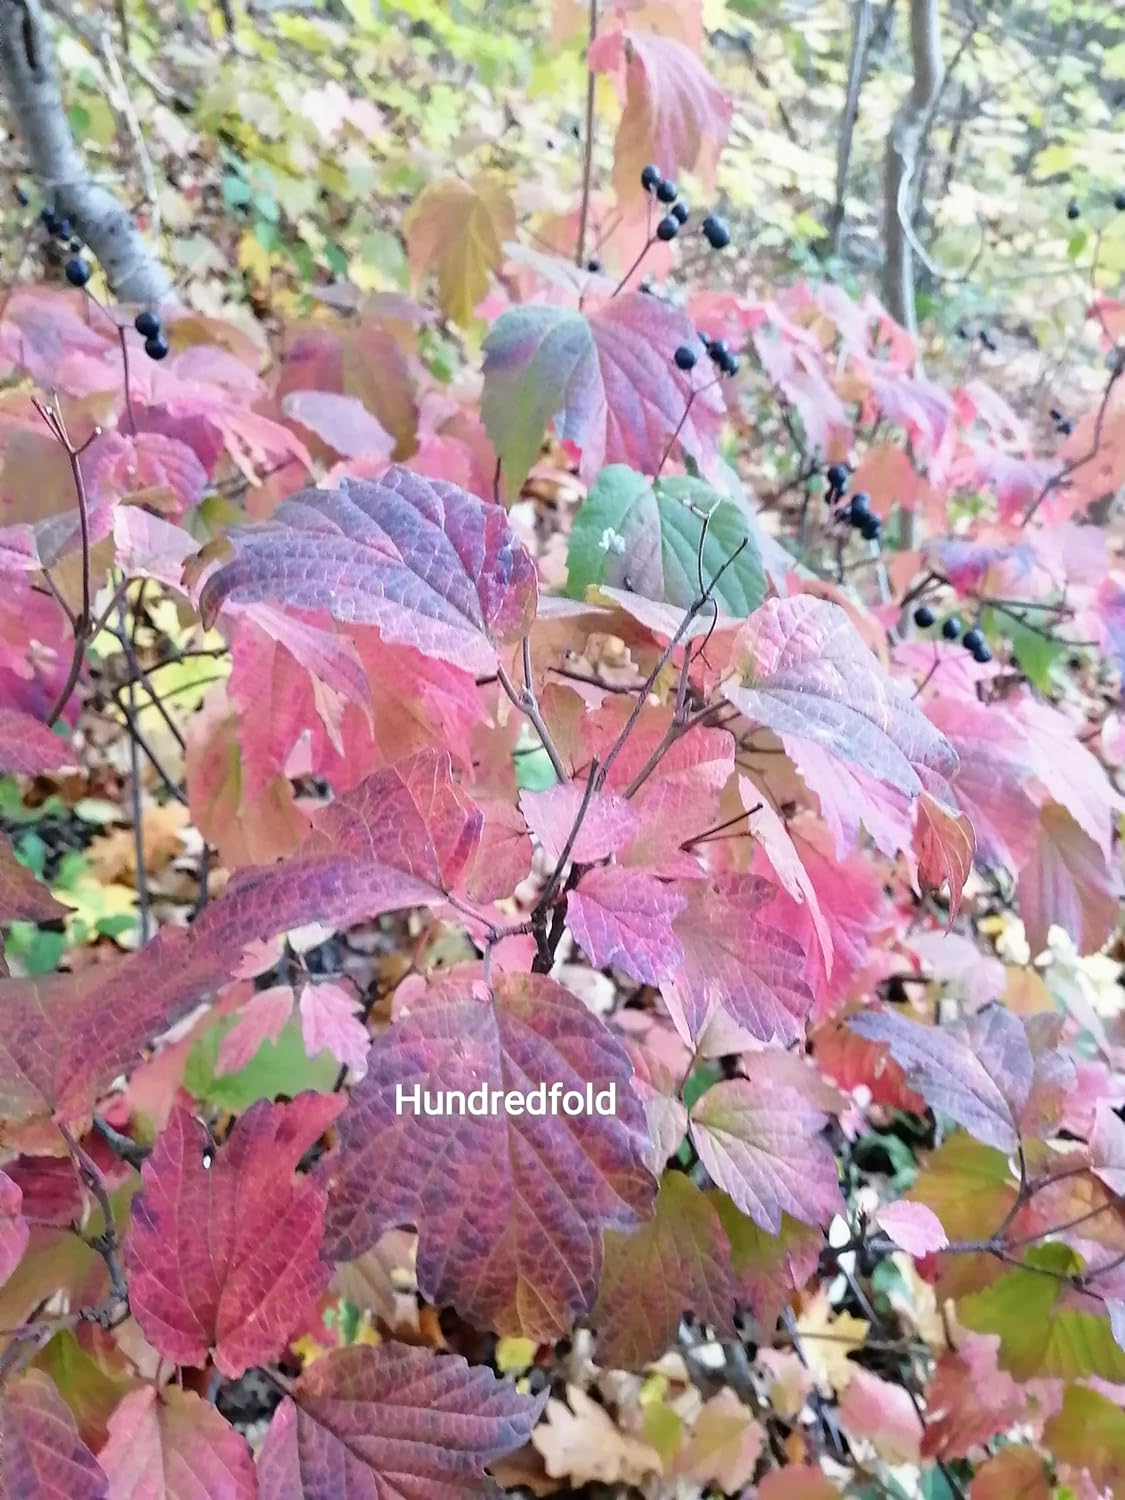 Hundredfold Mapleleaf Viburnum 5 Seeds – Viburnum acerifolium Maple-Leaf Arrowwood, Canada Native Shrub